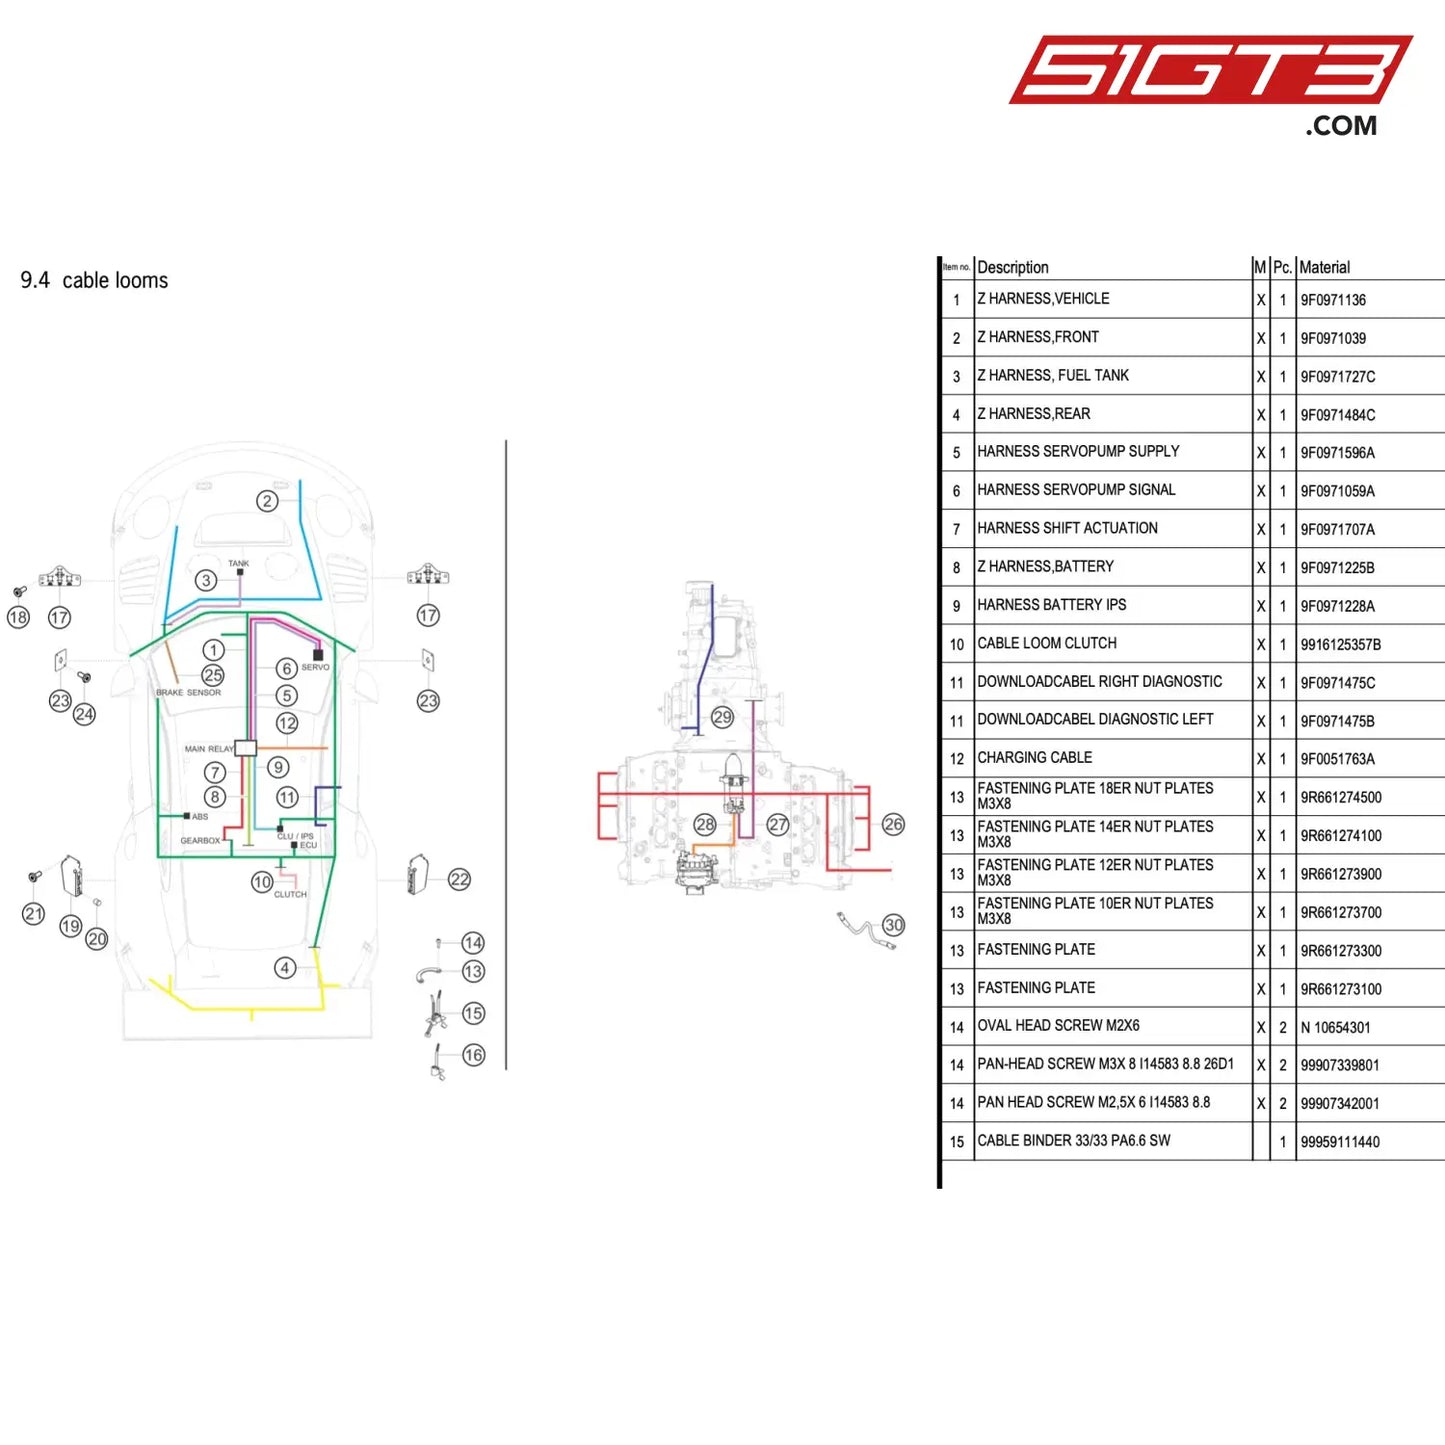 Fastening Plate 10Er Nut Plates M3X8 - 9R661273700 [Porsche 911 Gt3 R Type 991 (Gen 2)] Cable Looms